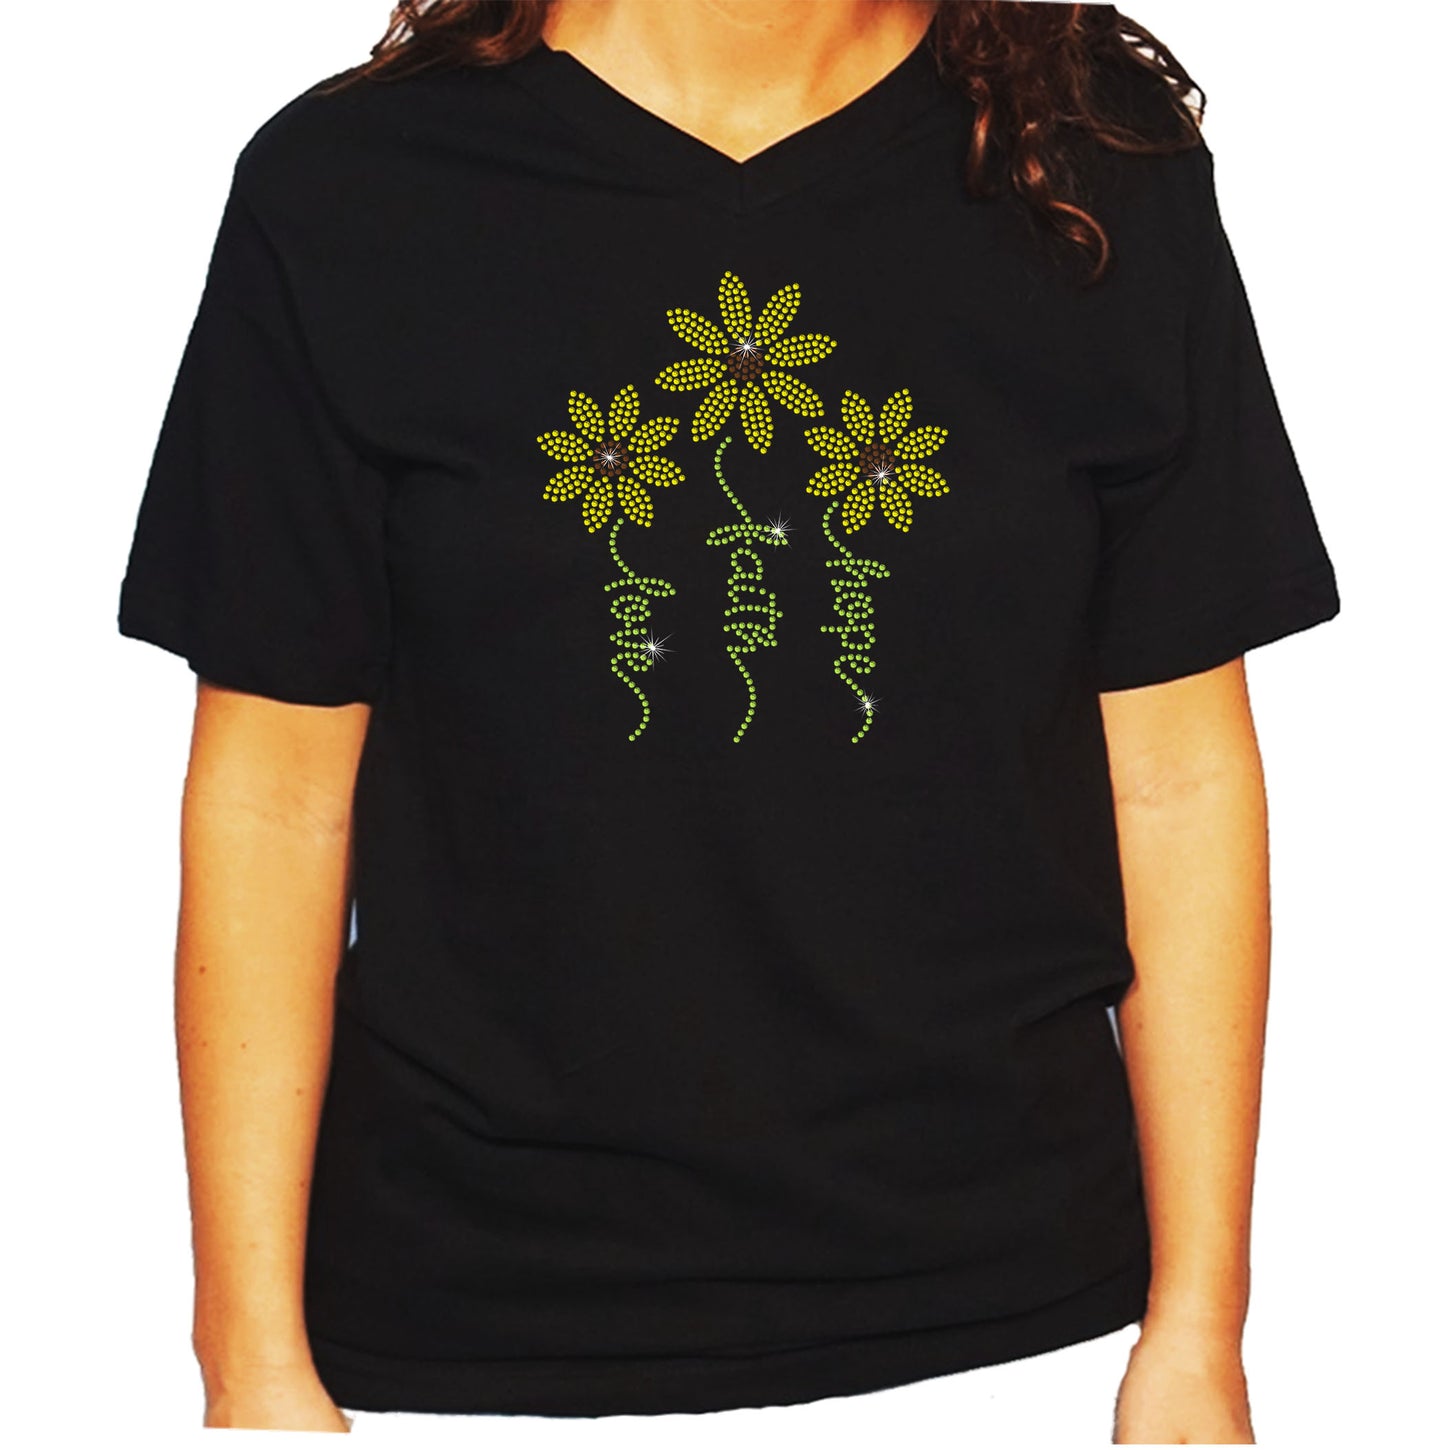 Women's/Unisex Rhinestone T-Shirt with Love, Faith, Hope Daisies Flowers - Daisy Shirt